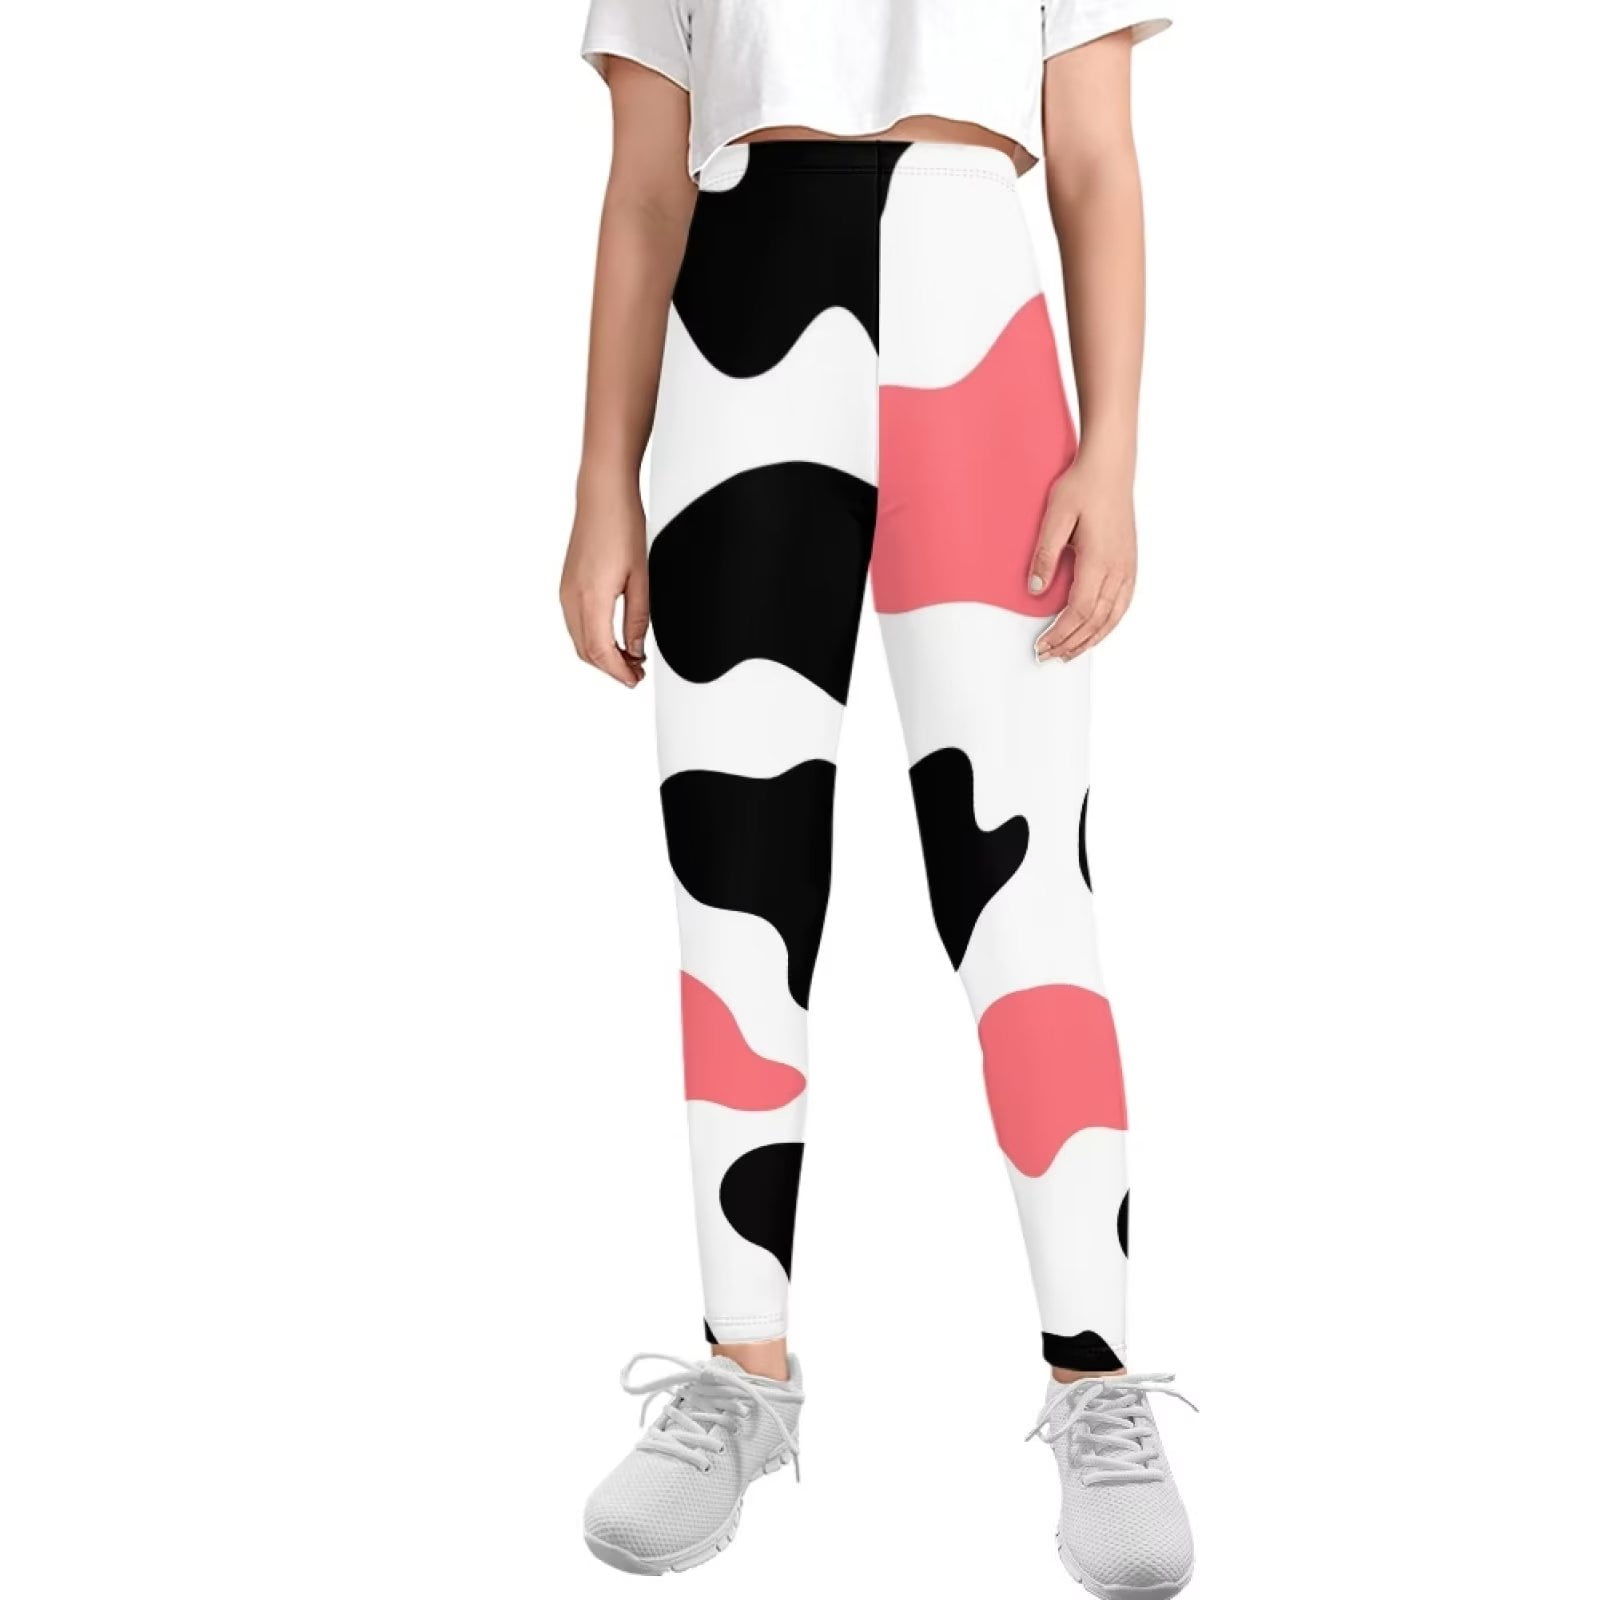 FKELYI Cow Print Kids Leggings Size 8-9 Years Elastic School Girls